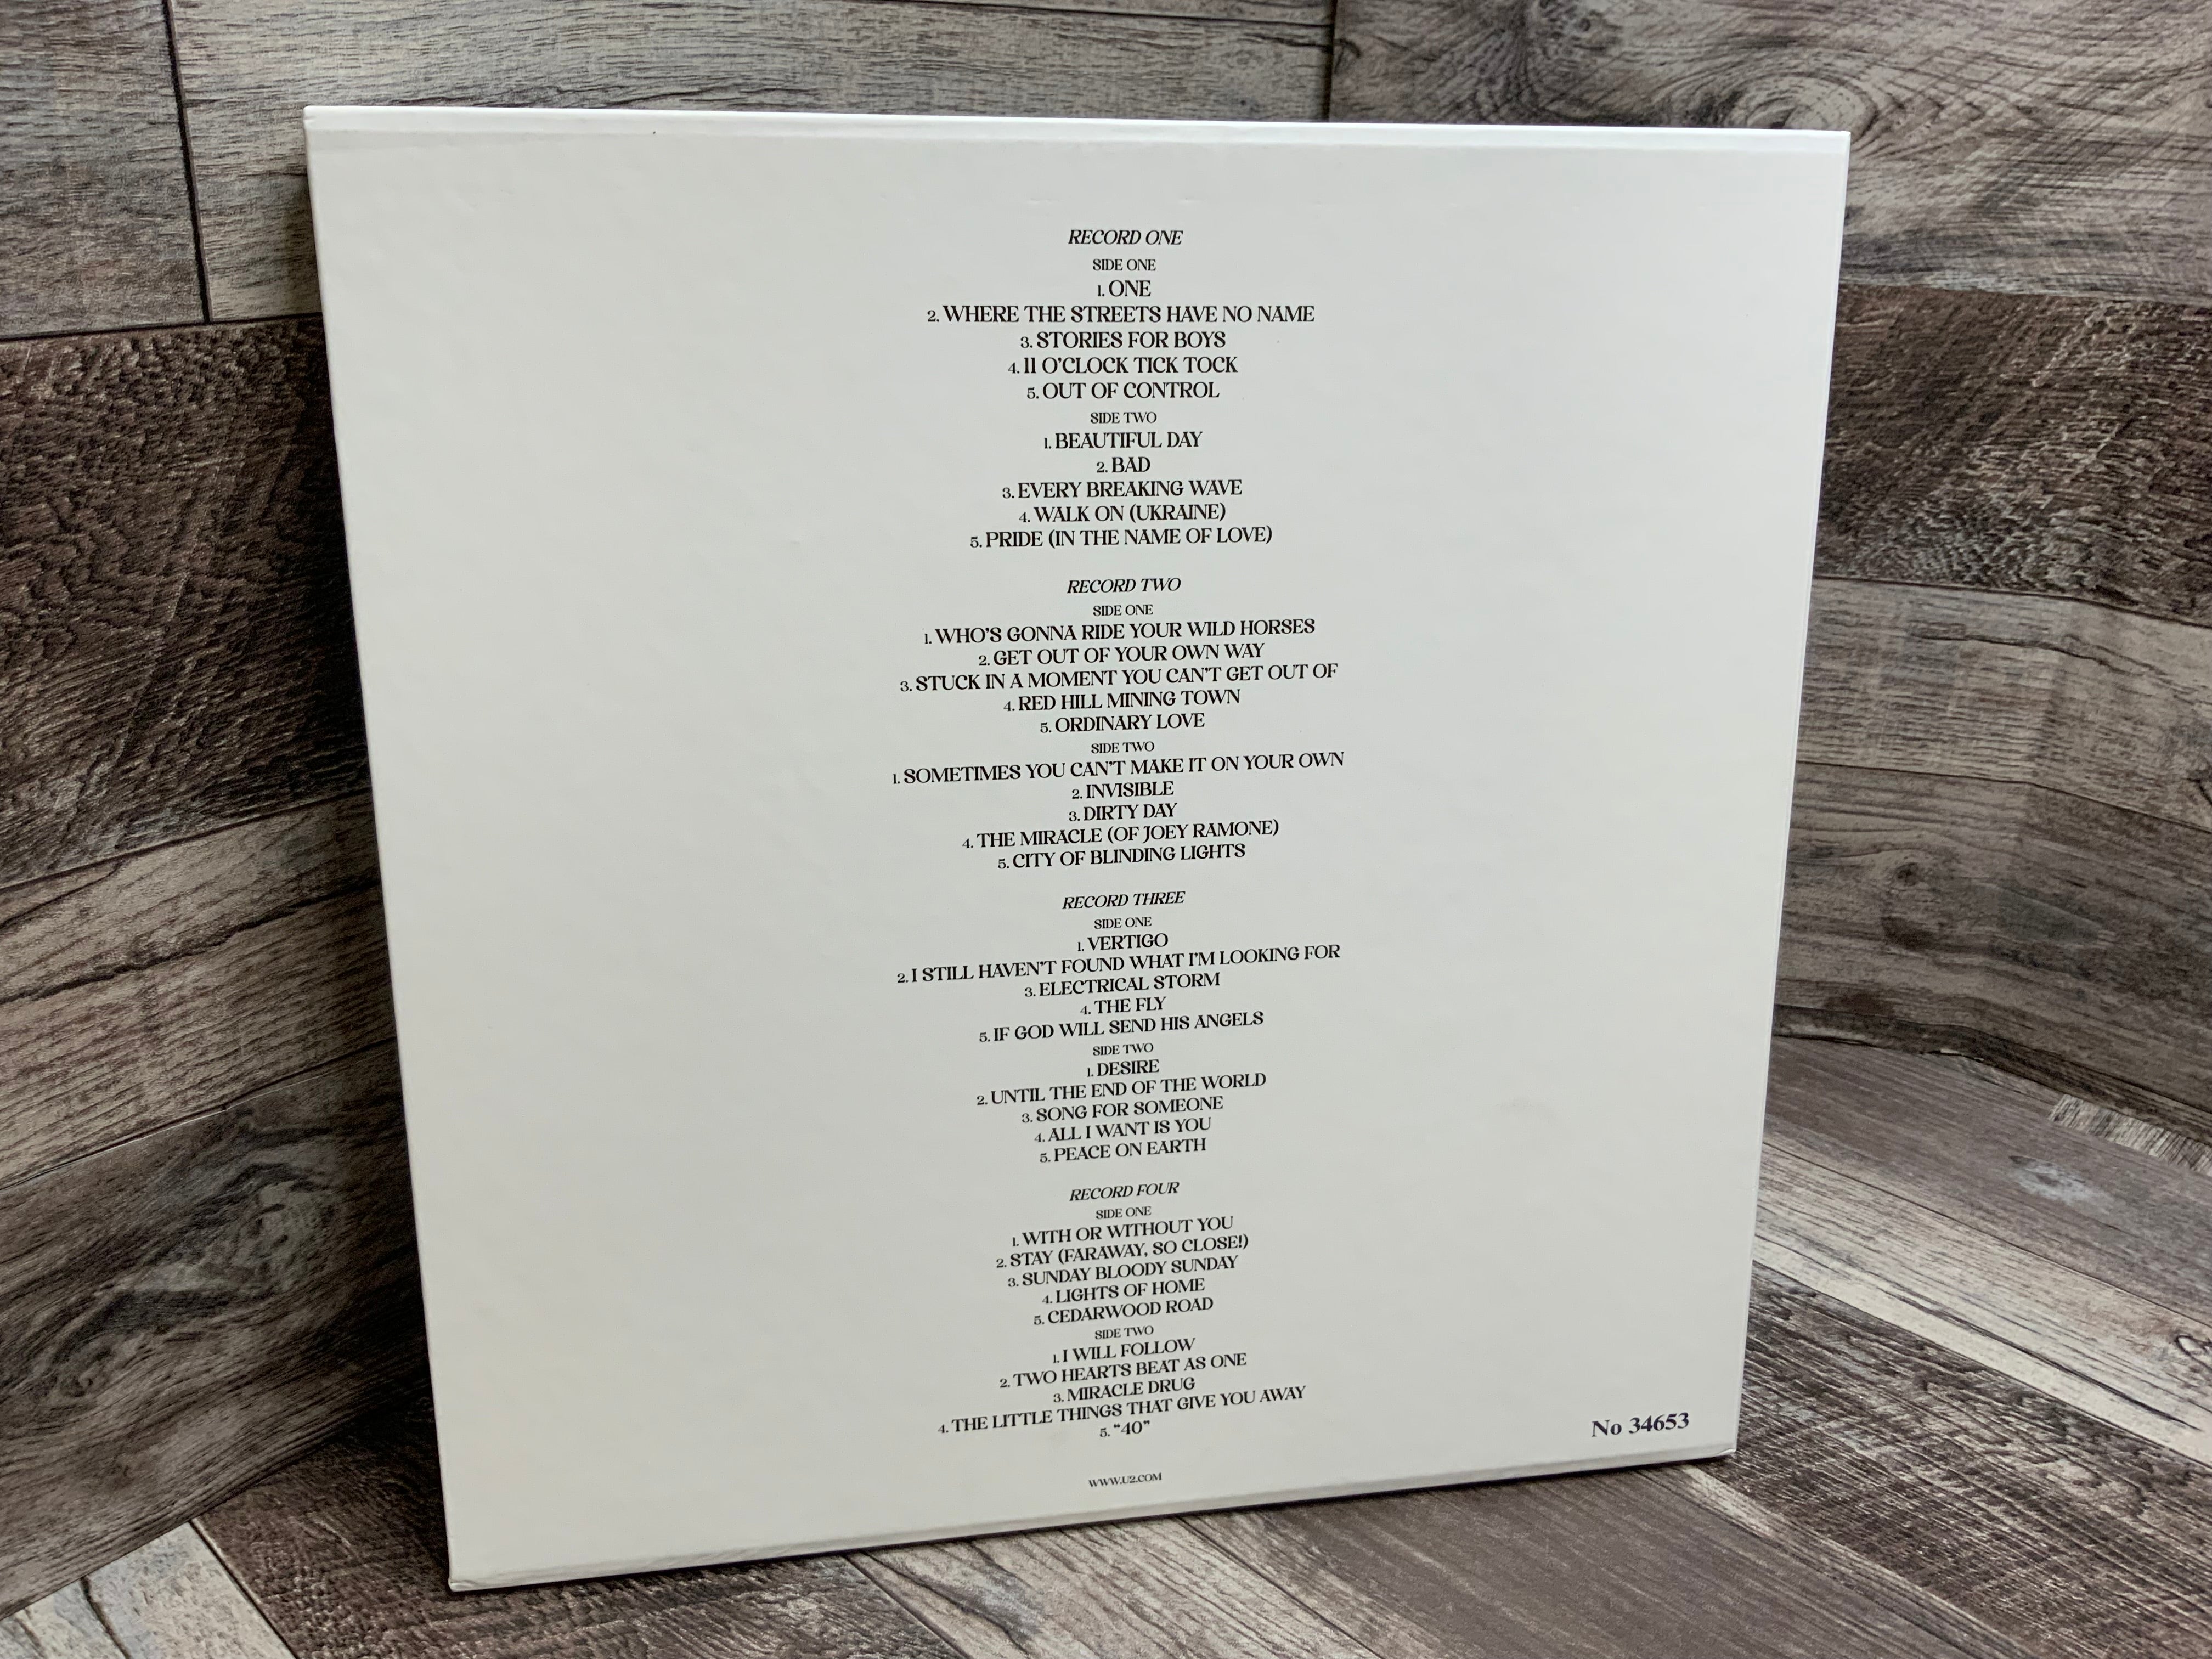 U2 Songs Of Surrender[4 LP Super Deluxe Collector's Boxset] (8080360276206)